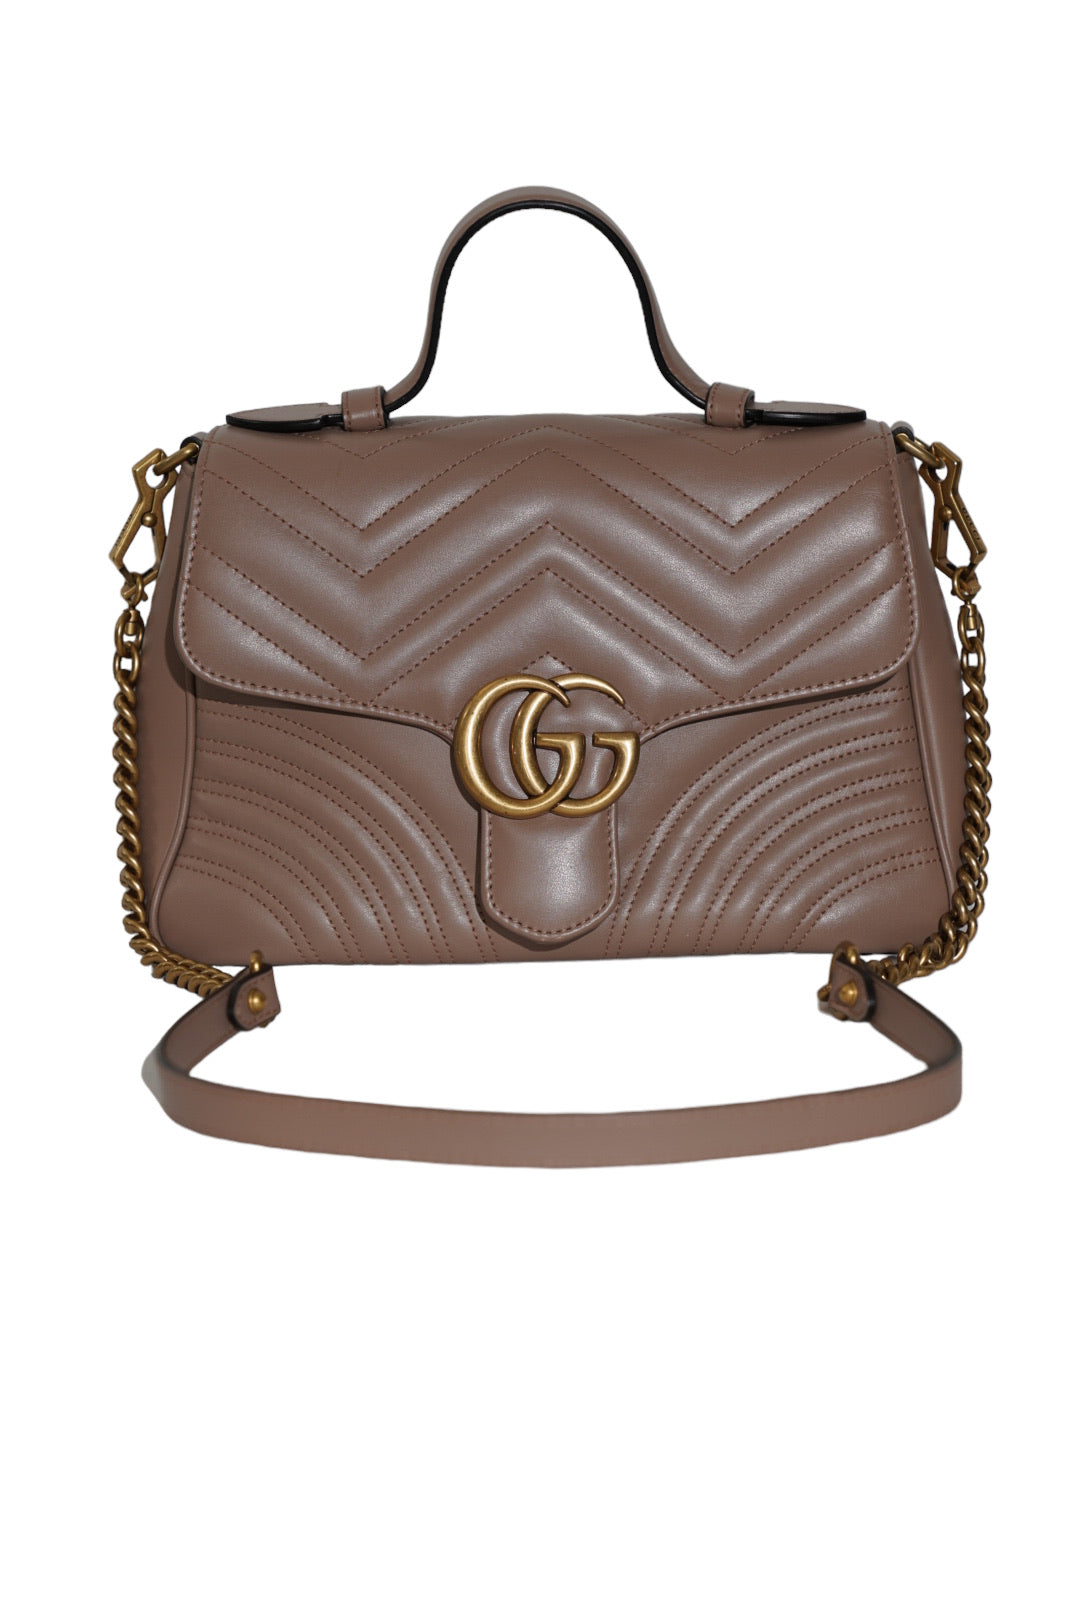 GUCCI - GG Marmont Top Handle Bag